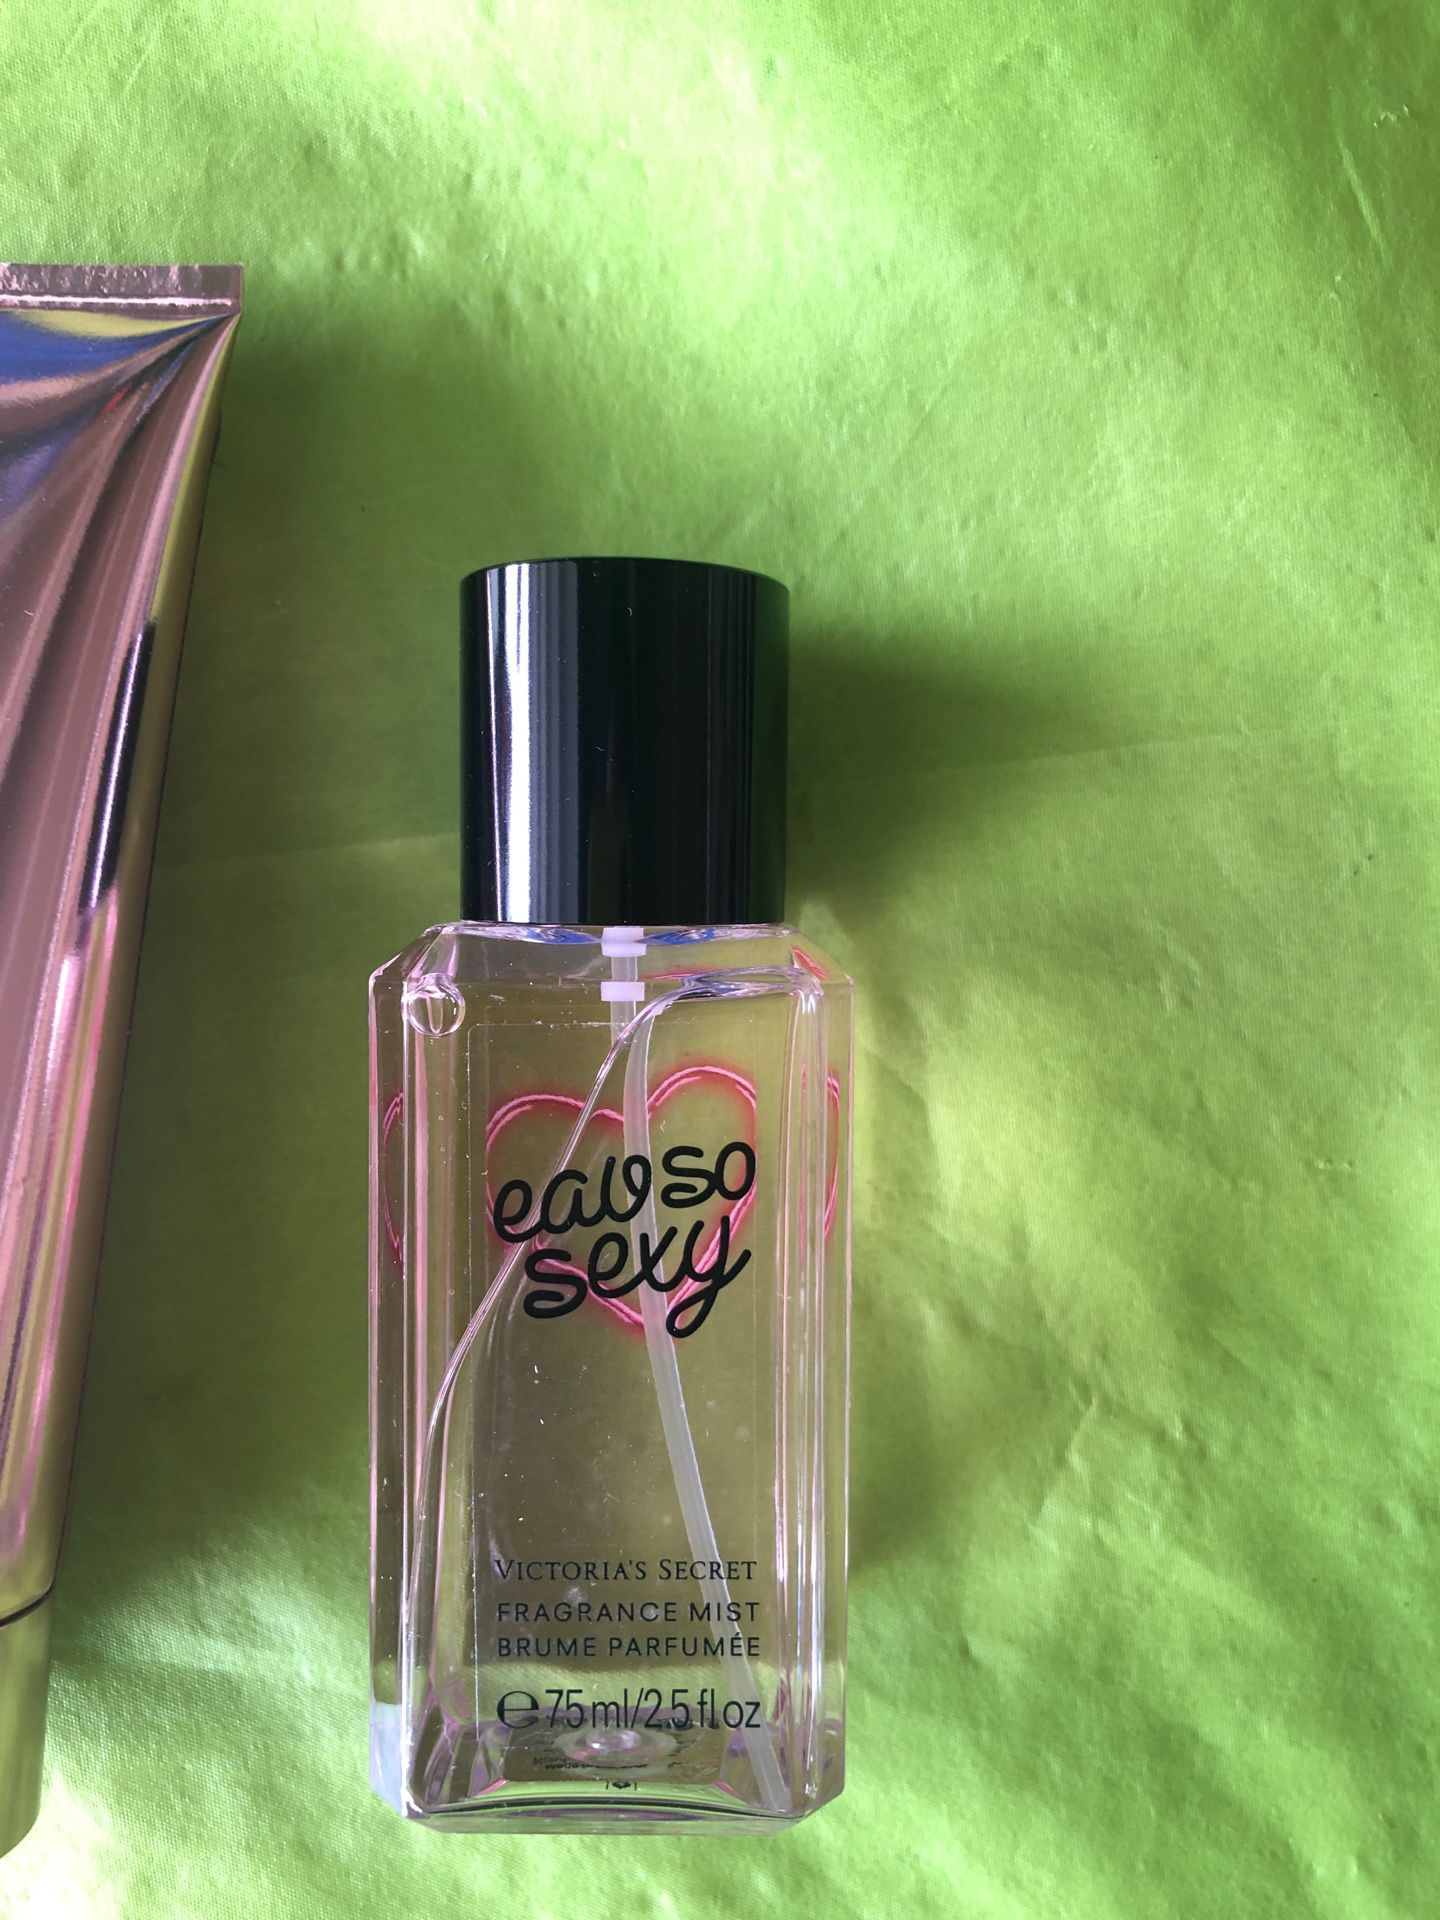 Victoria’s Secret fragrance mist and fragrance lotion